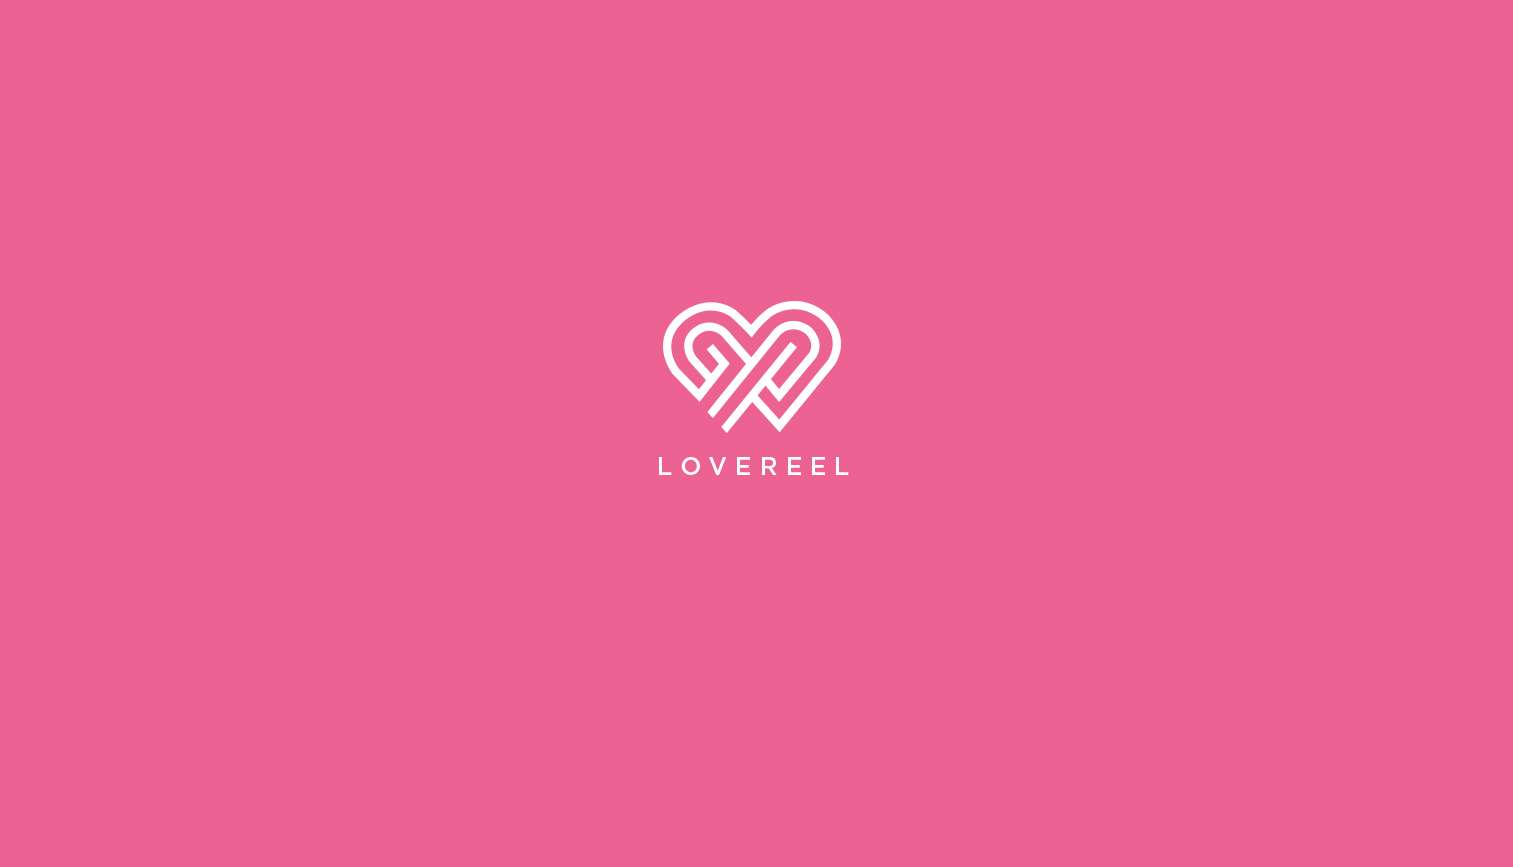 KOS Design - Love's Reel